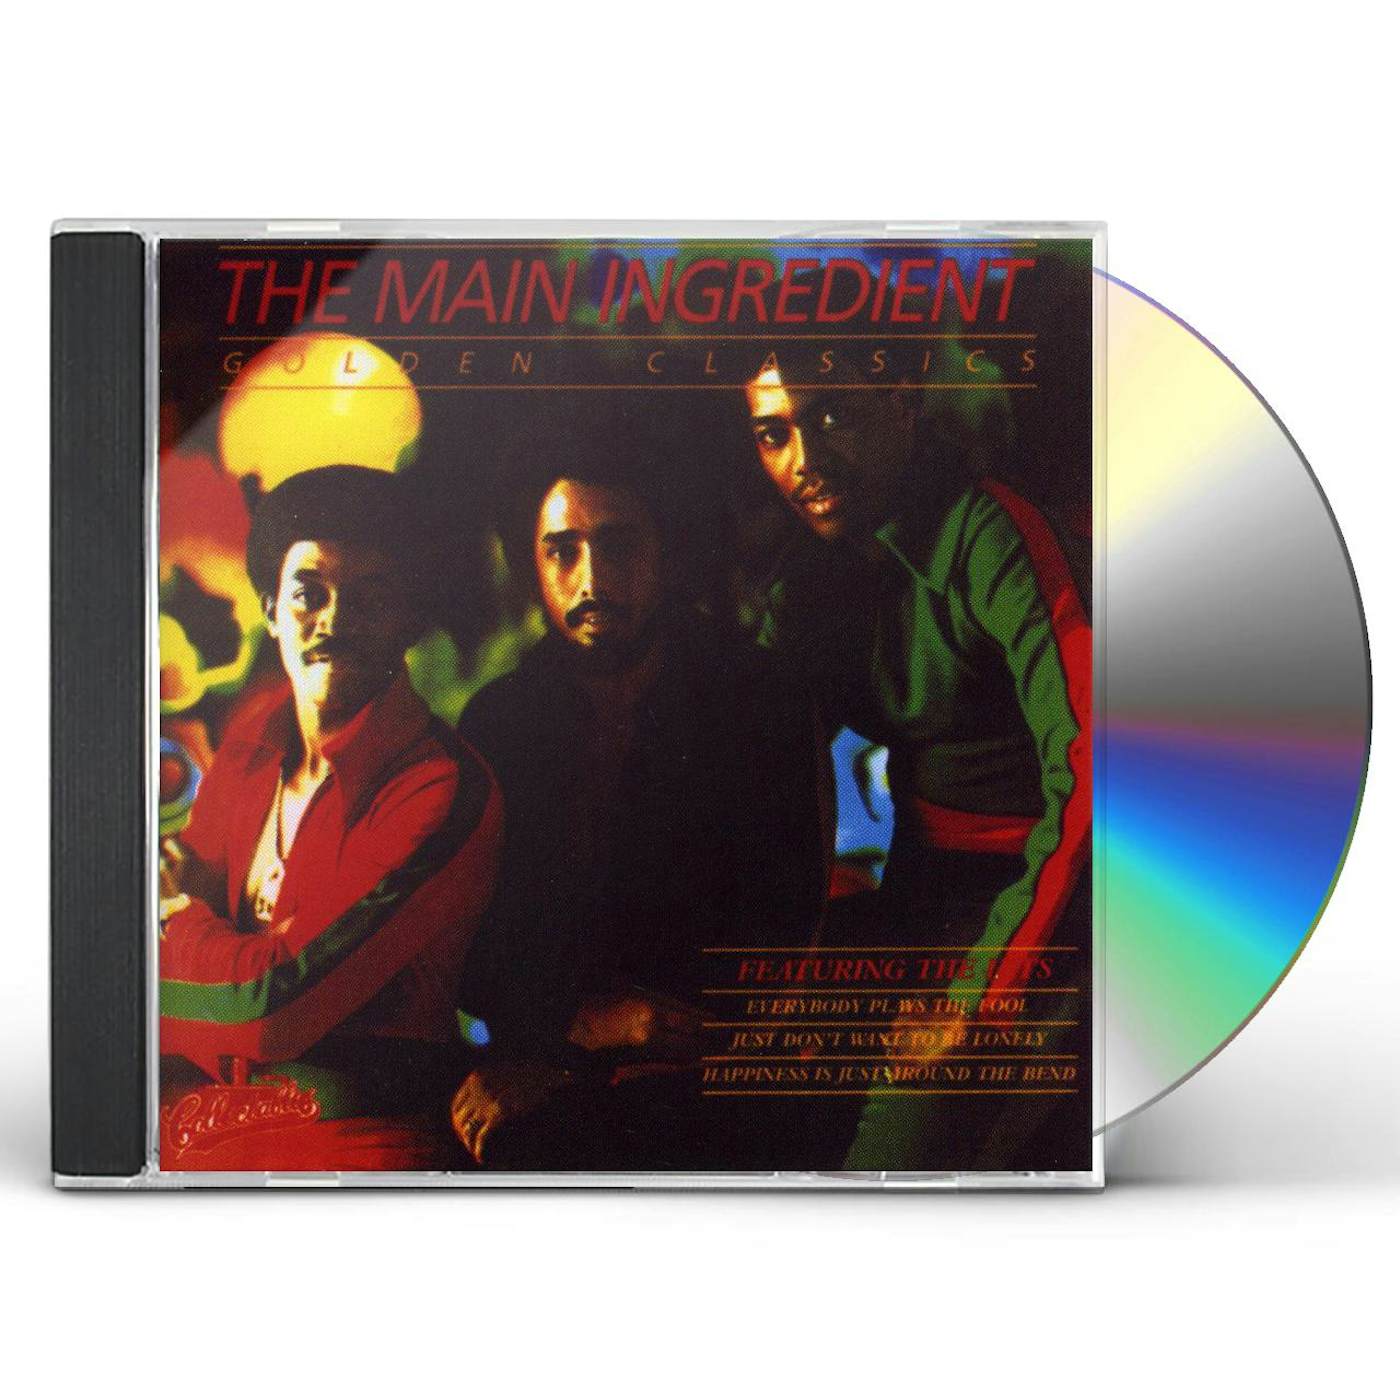 The Main Ingredient GOLDEN CLASSICS CD